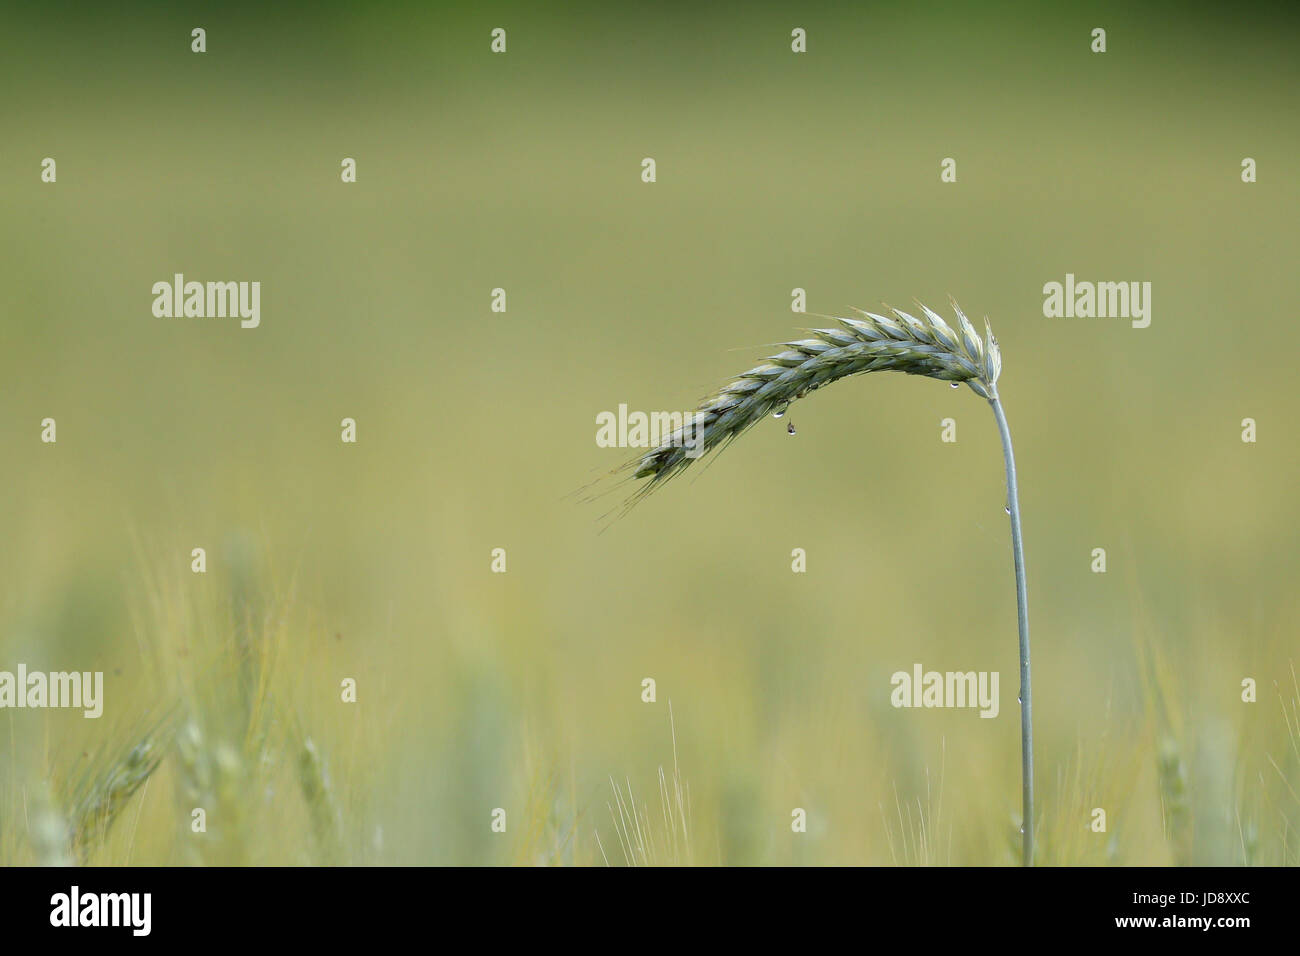 Wheat field background Stock Photo